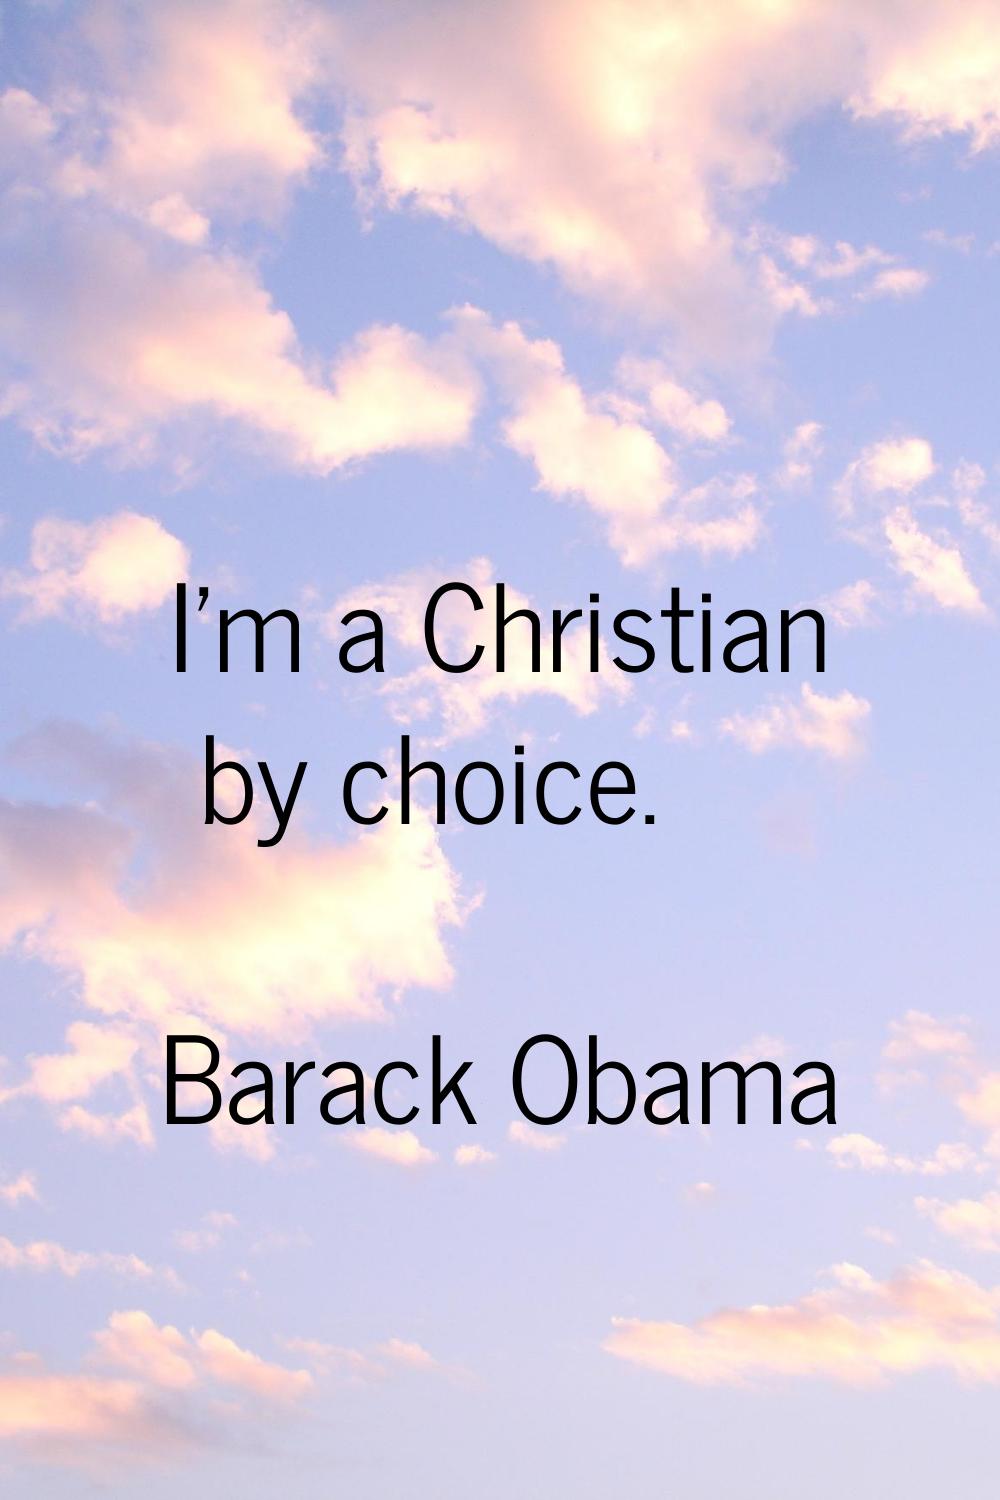 I'm a Christian by choice.